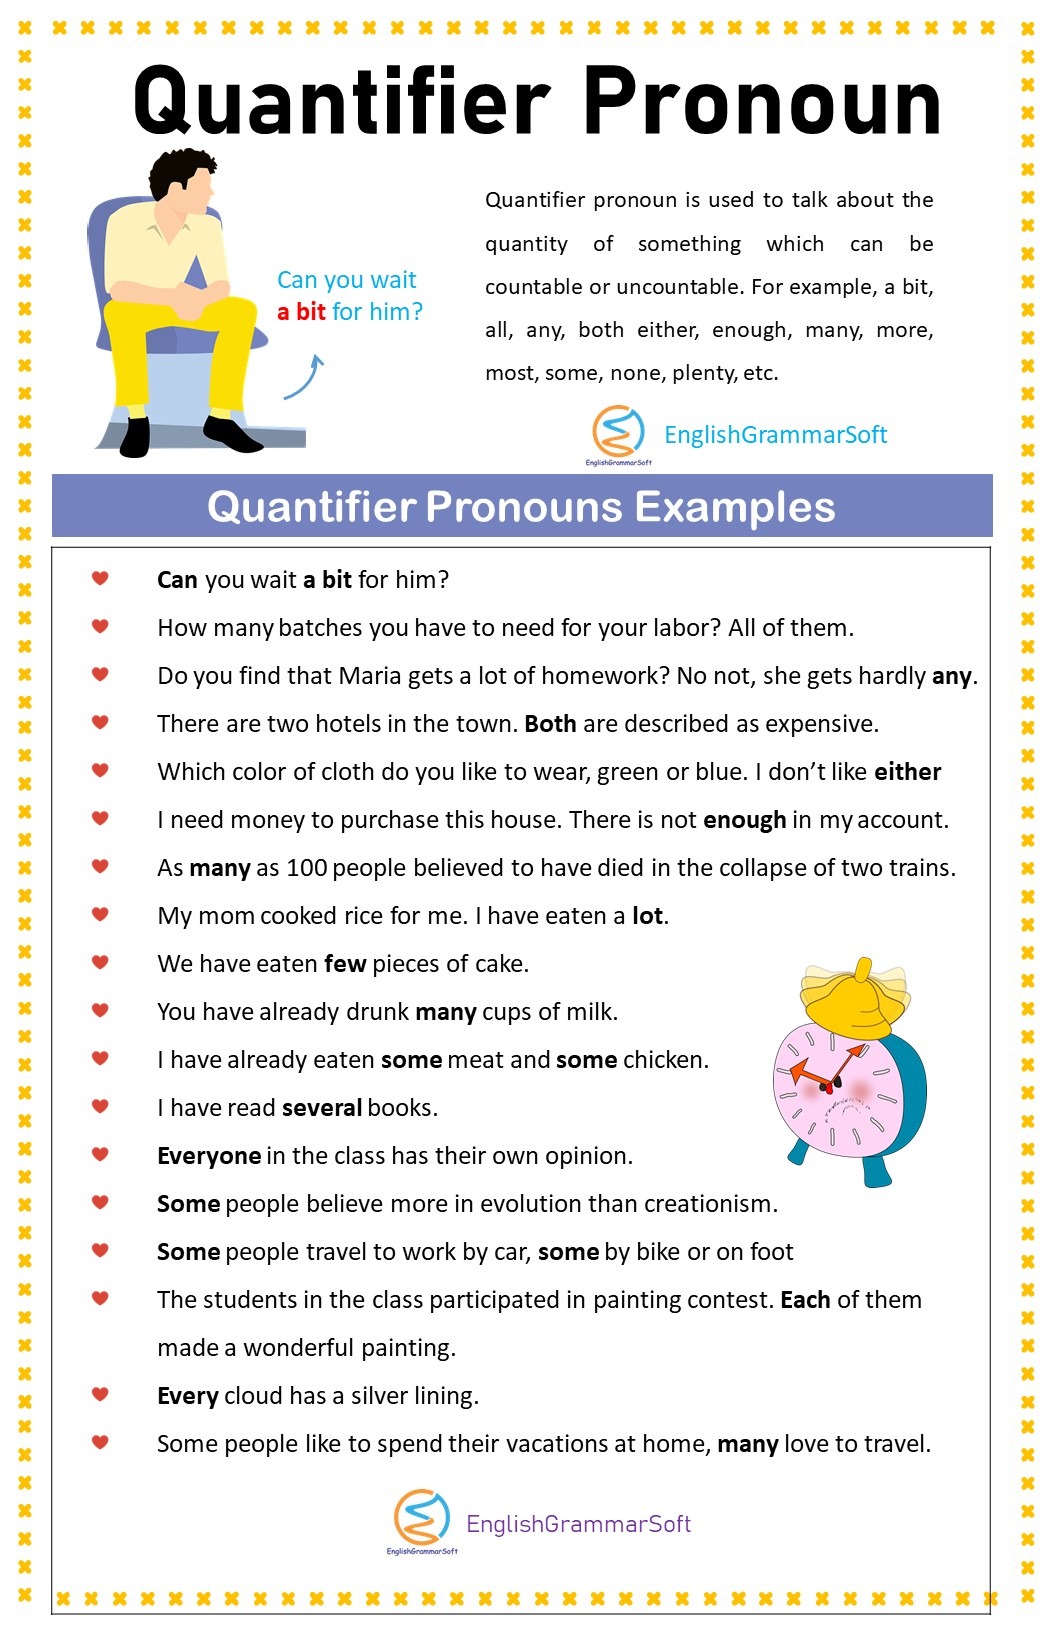 Quantifier Pronoun (Examples and Definition)